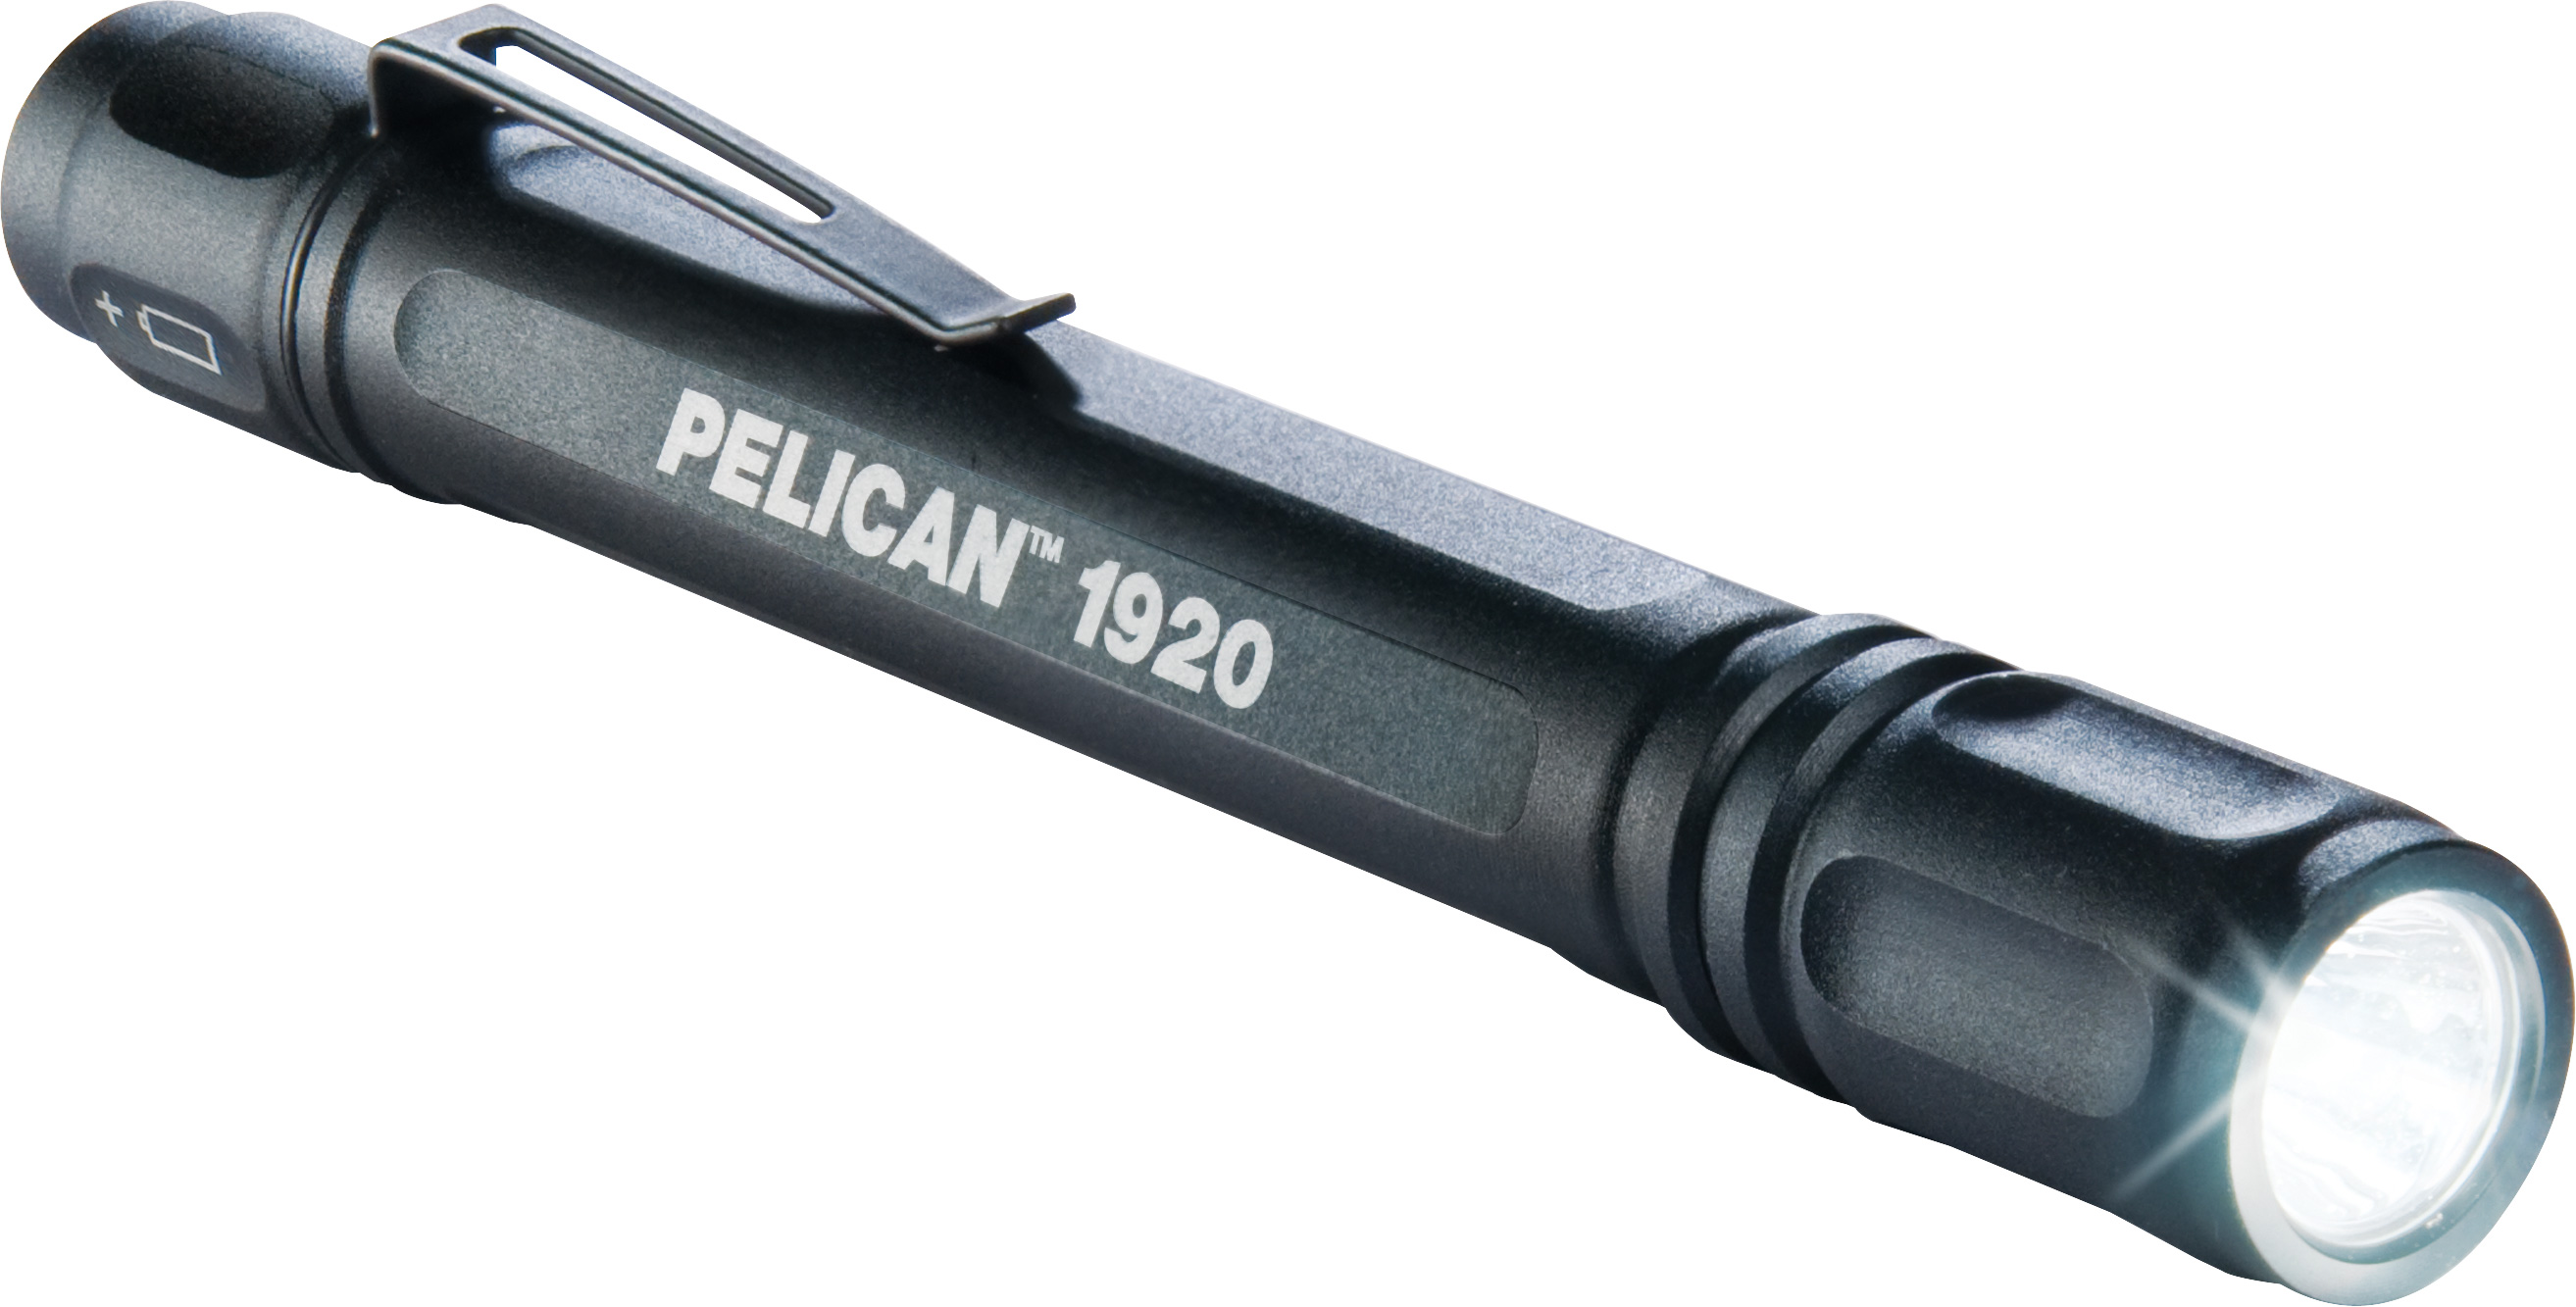 Pelican ProGear 1920 224 Lumen LED Flashlight 13% Off 4.5 Star Rating  Free Shipping over $49!